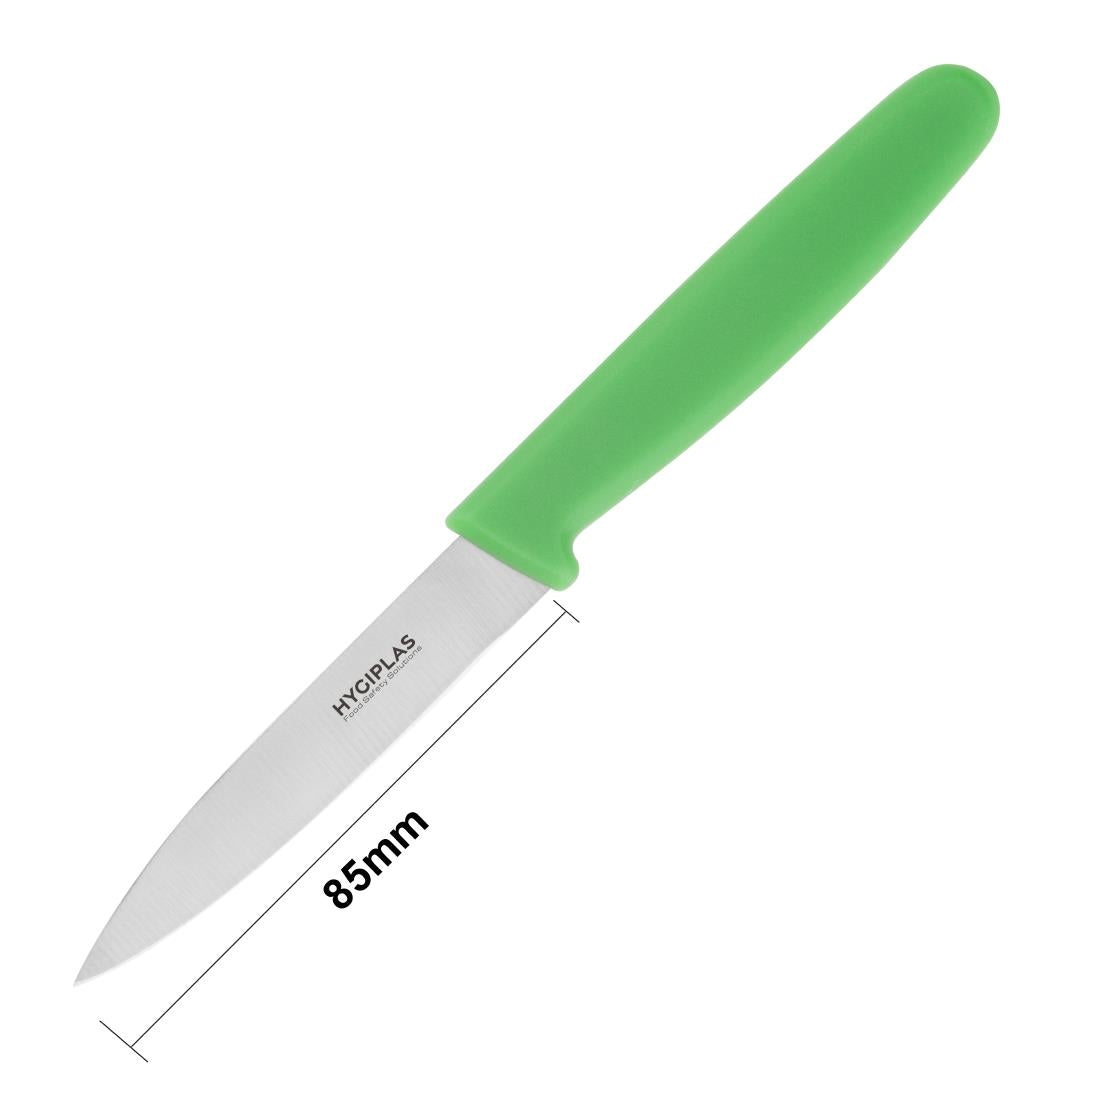 C545 Hygiplas Paring Knife Green 7.5cm JD Catering Equipment Solutions Ltd